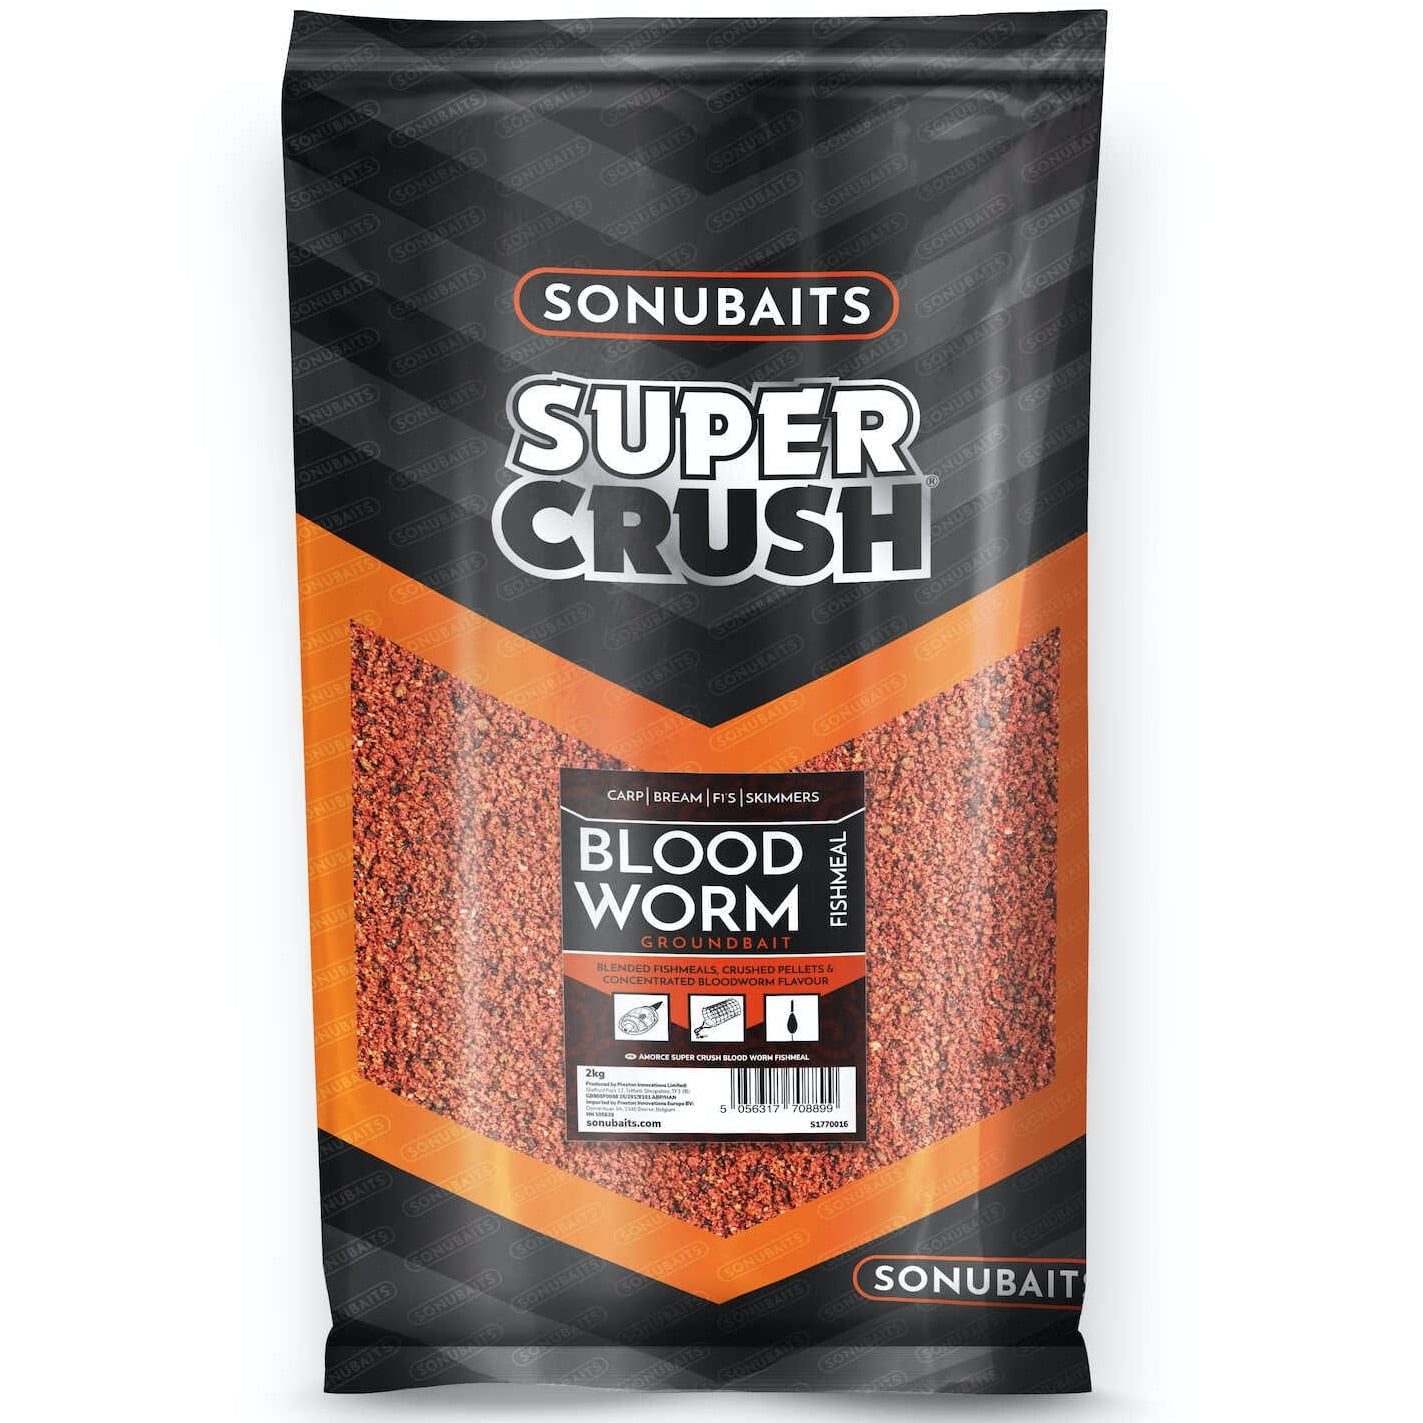 Sonubaits supercrush bloodworm fishmeal S1770016